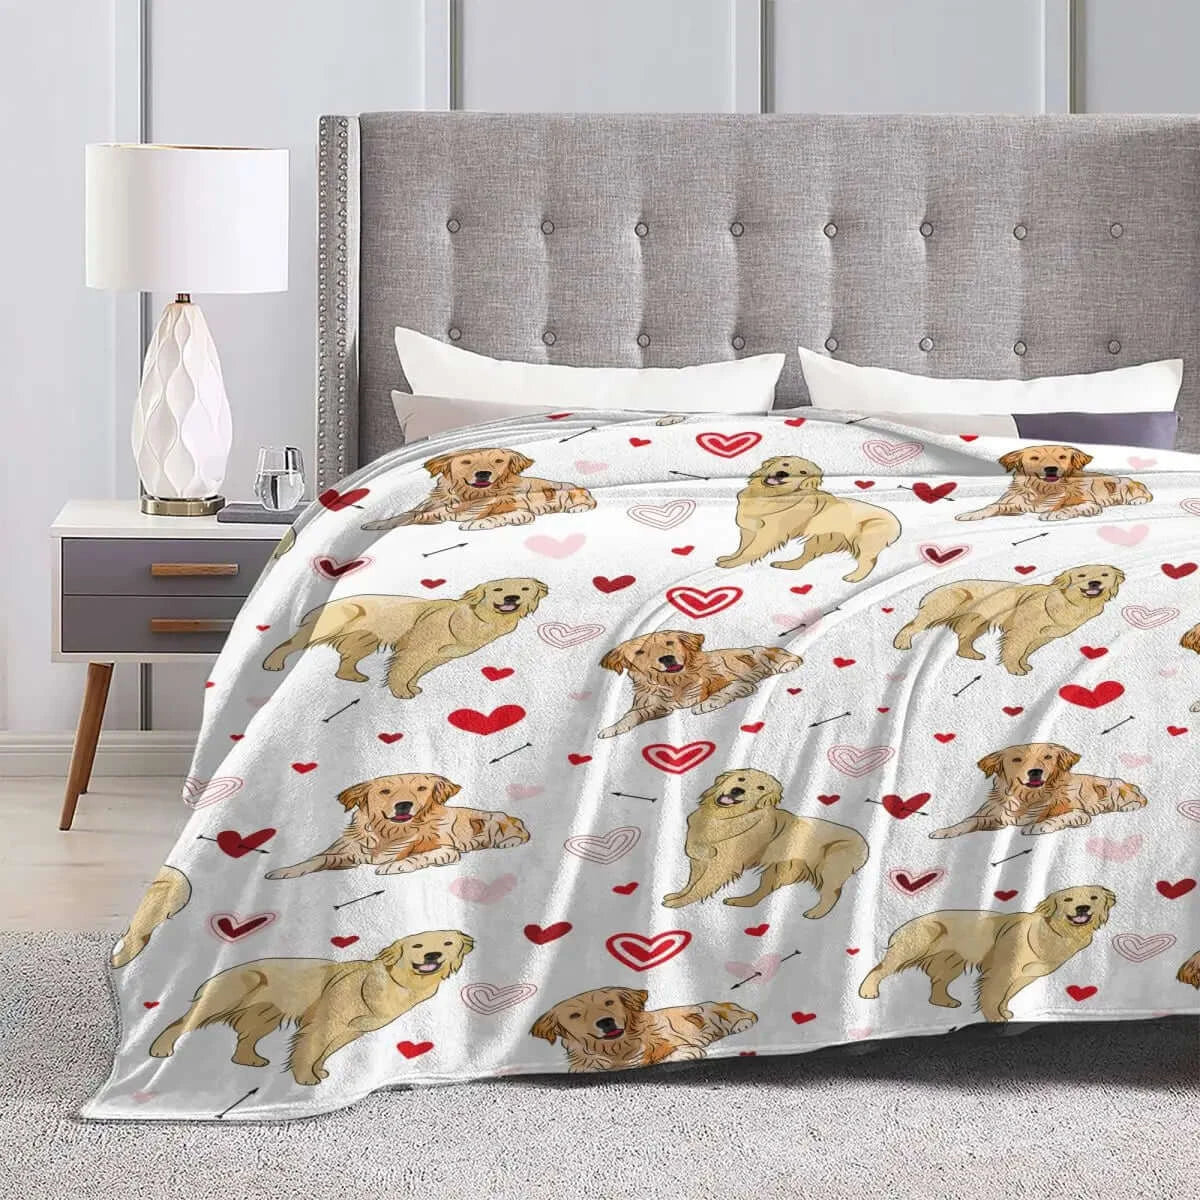 Golden Retriever Dog Love Doodles Hearts Flannel Blanket